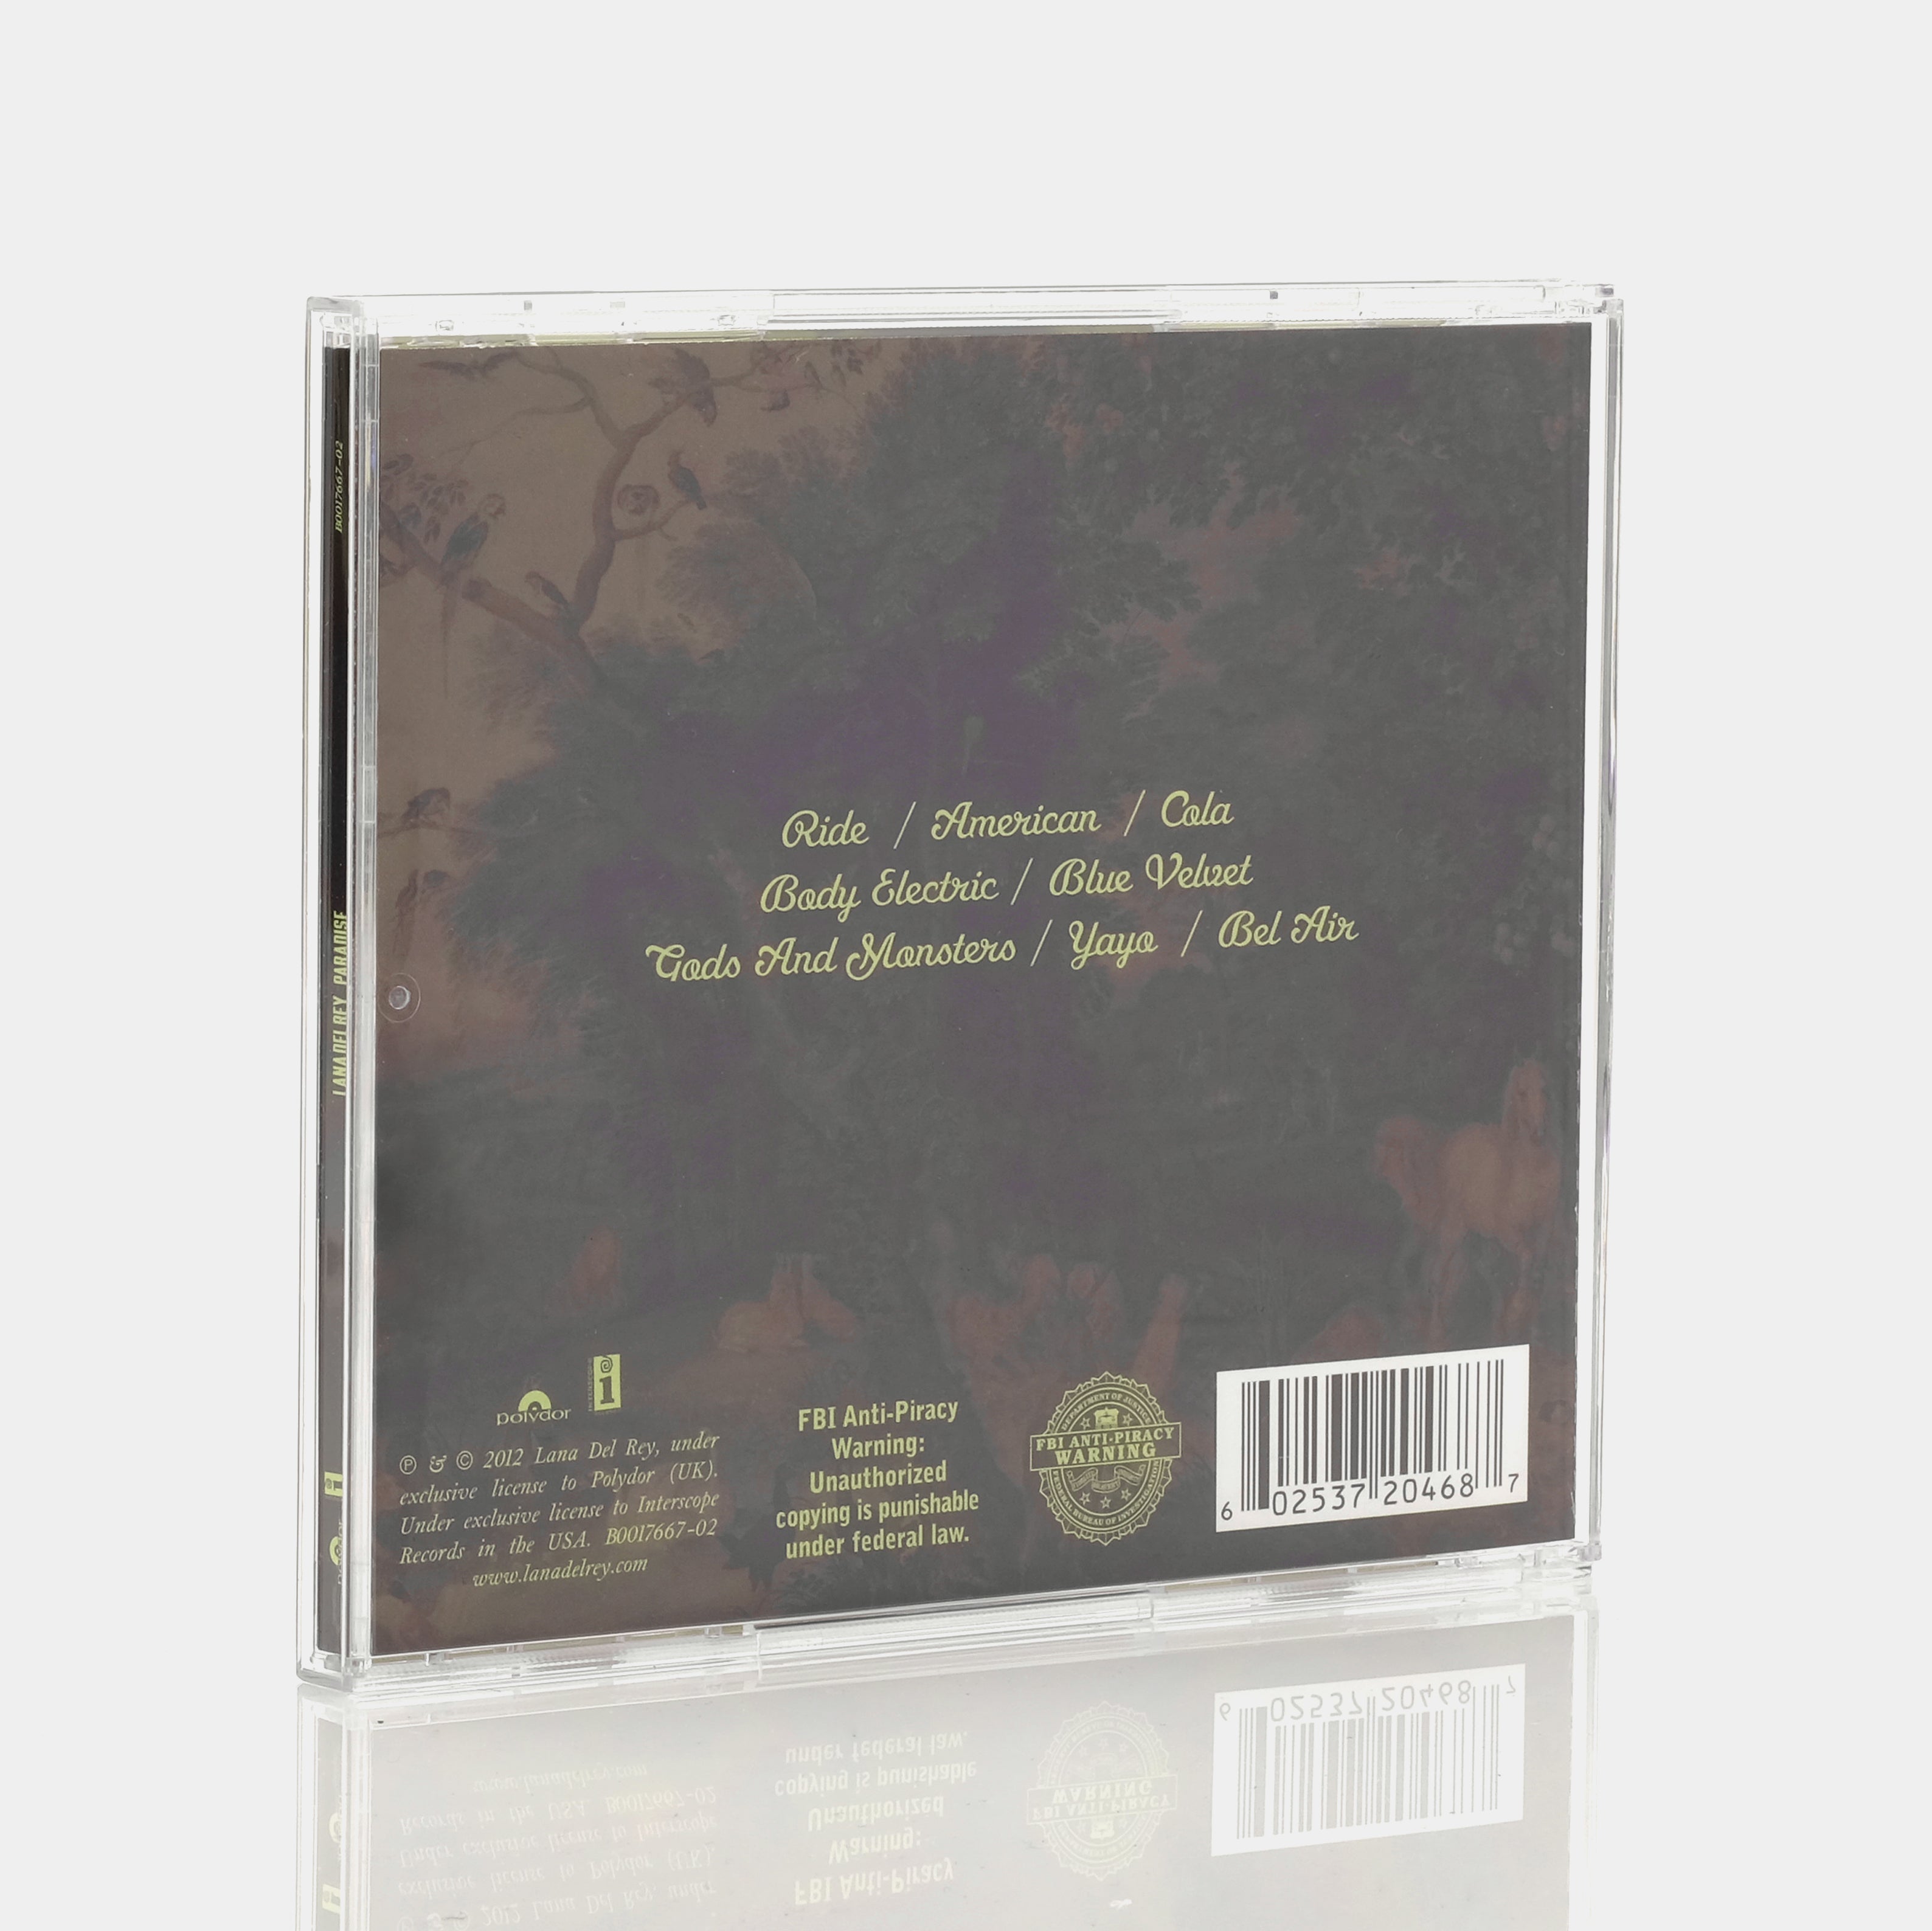 Lana Del Rey - Paradise CD